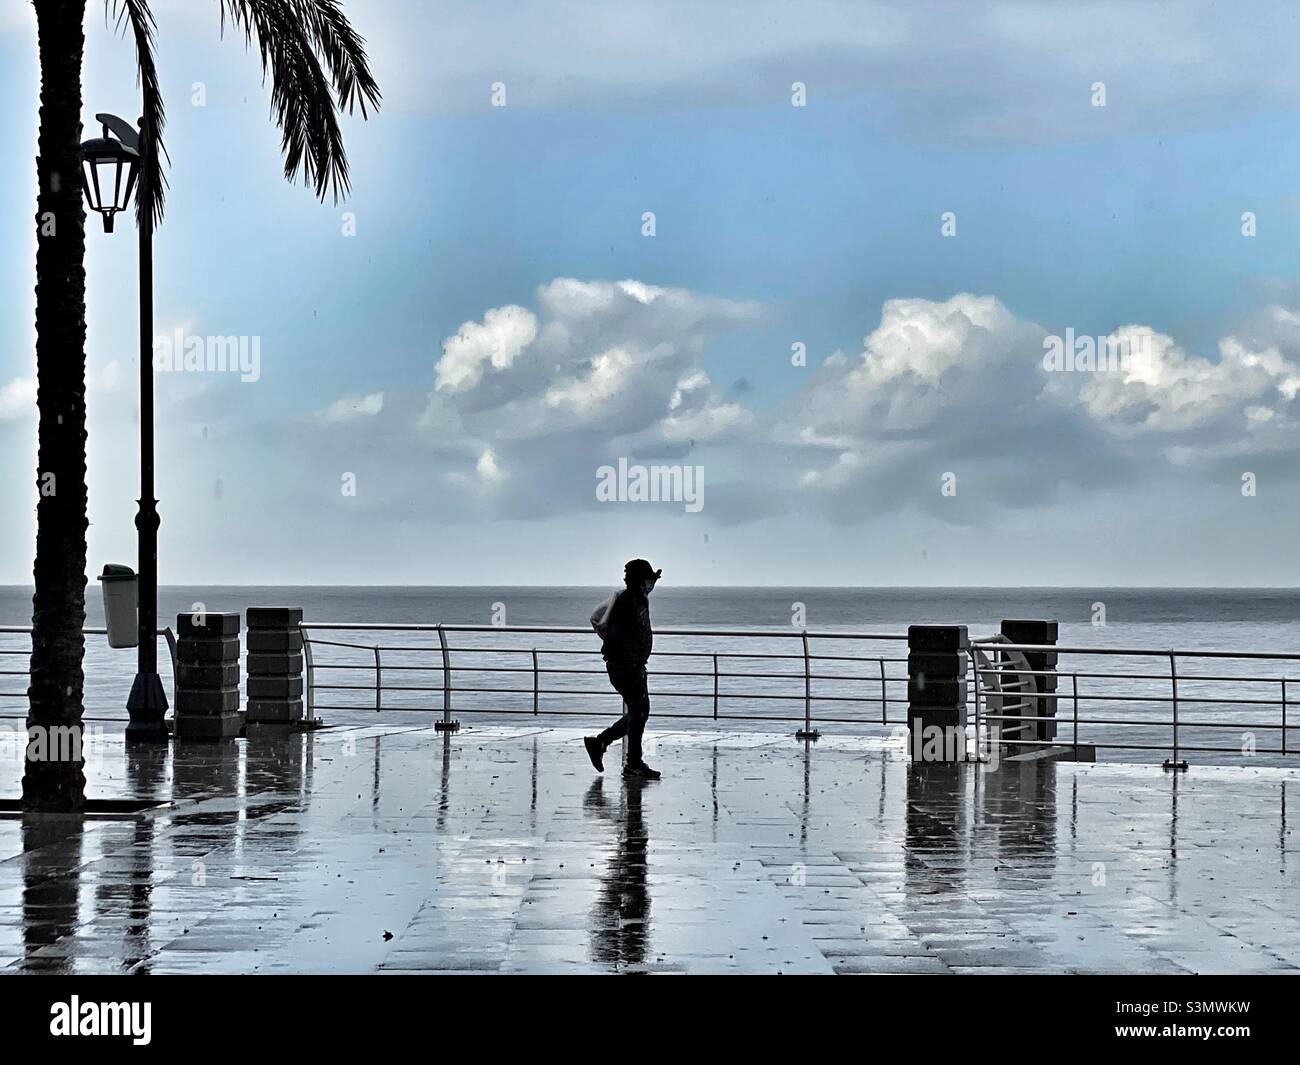 Adult waking under the rain at the sea promenade Stock Photo